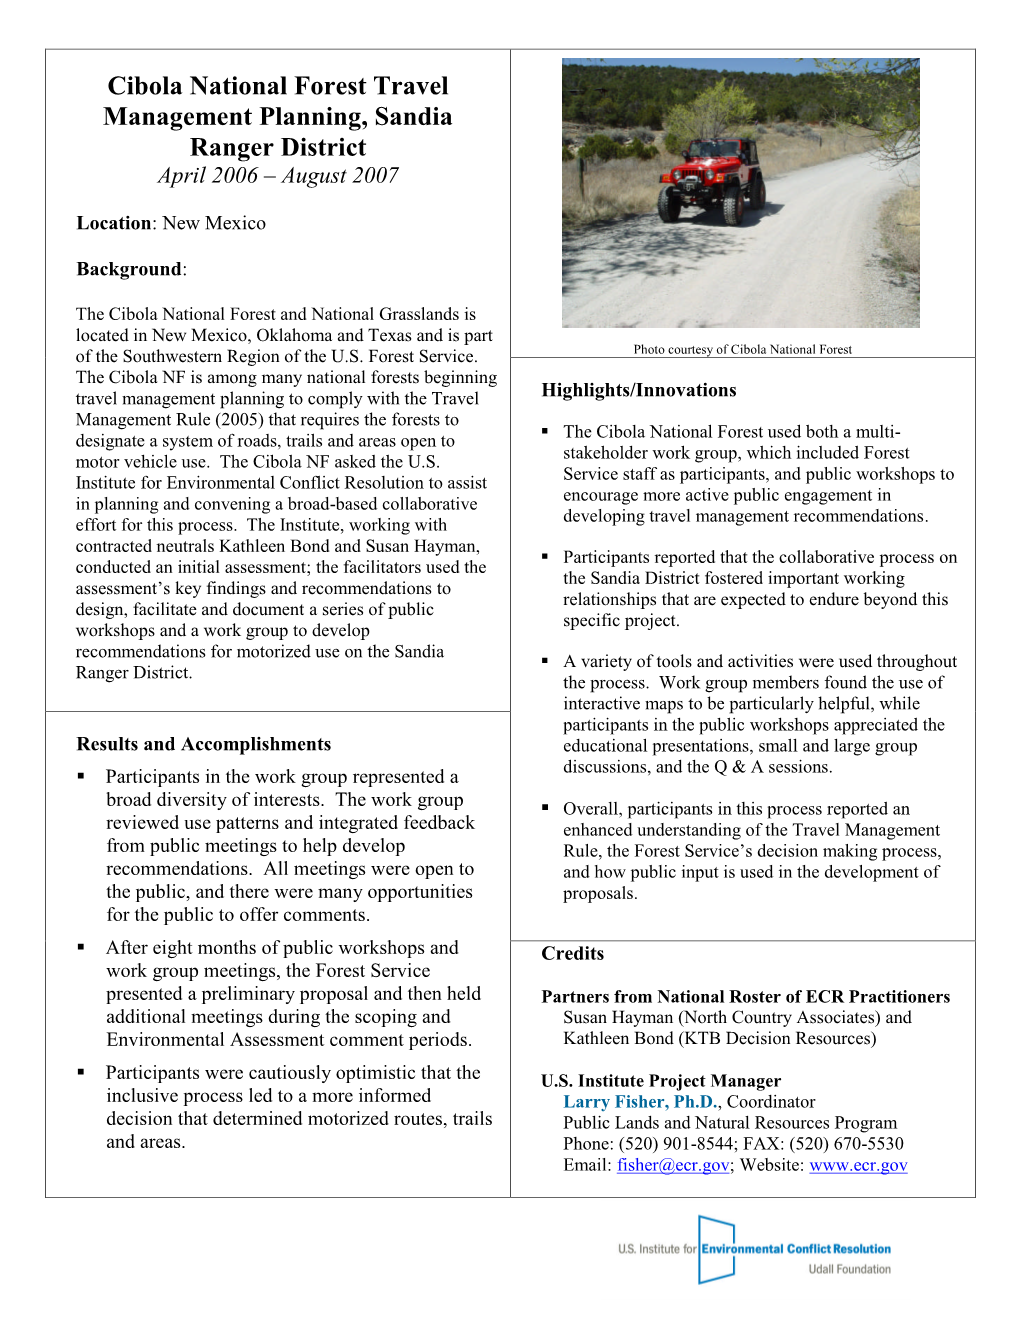 Cibola National Forest Travel Management Planning, Sandia Ranger District April 2006 – August 2007